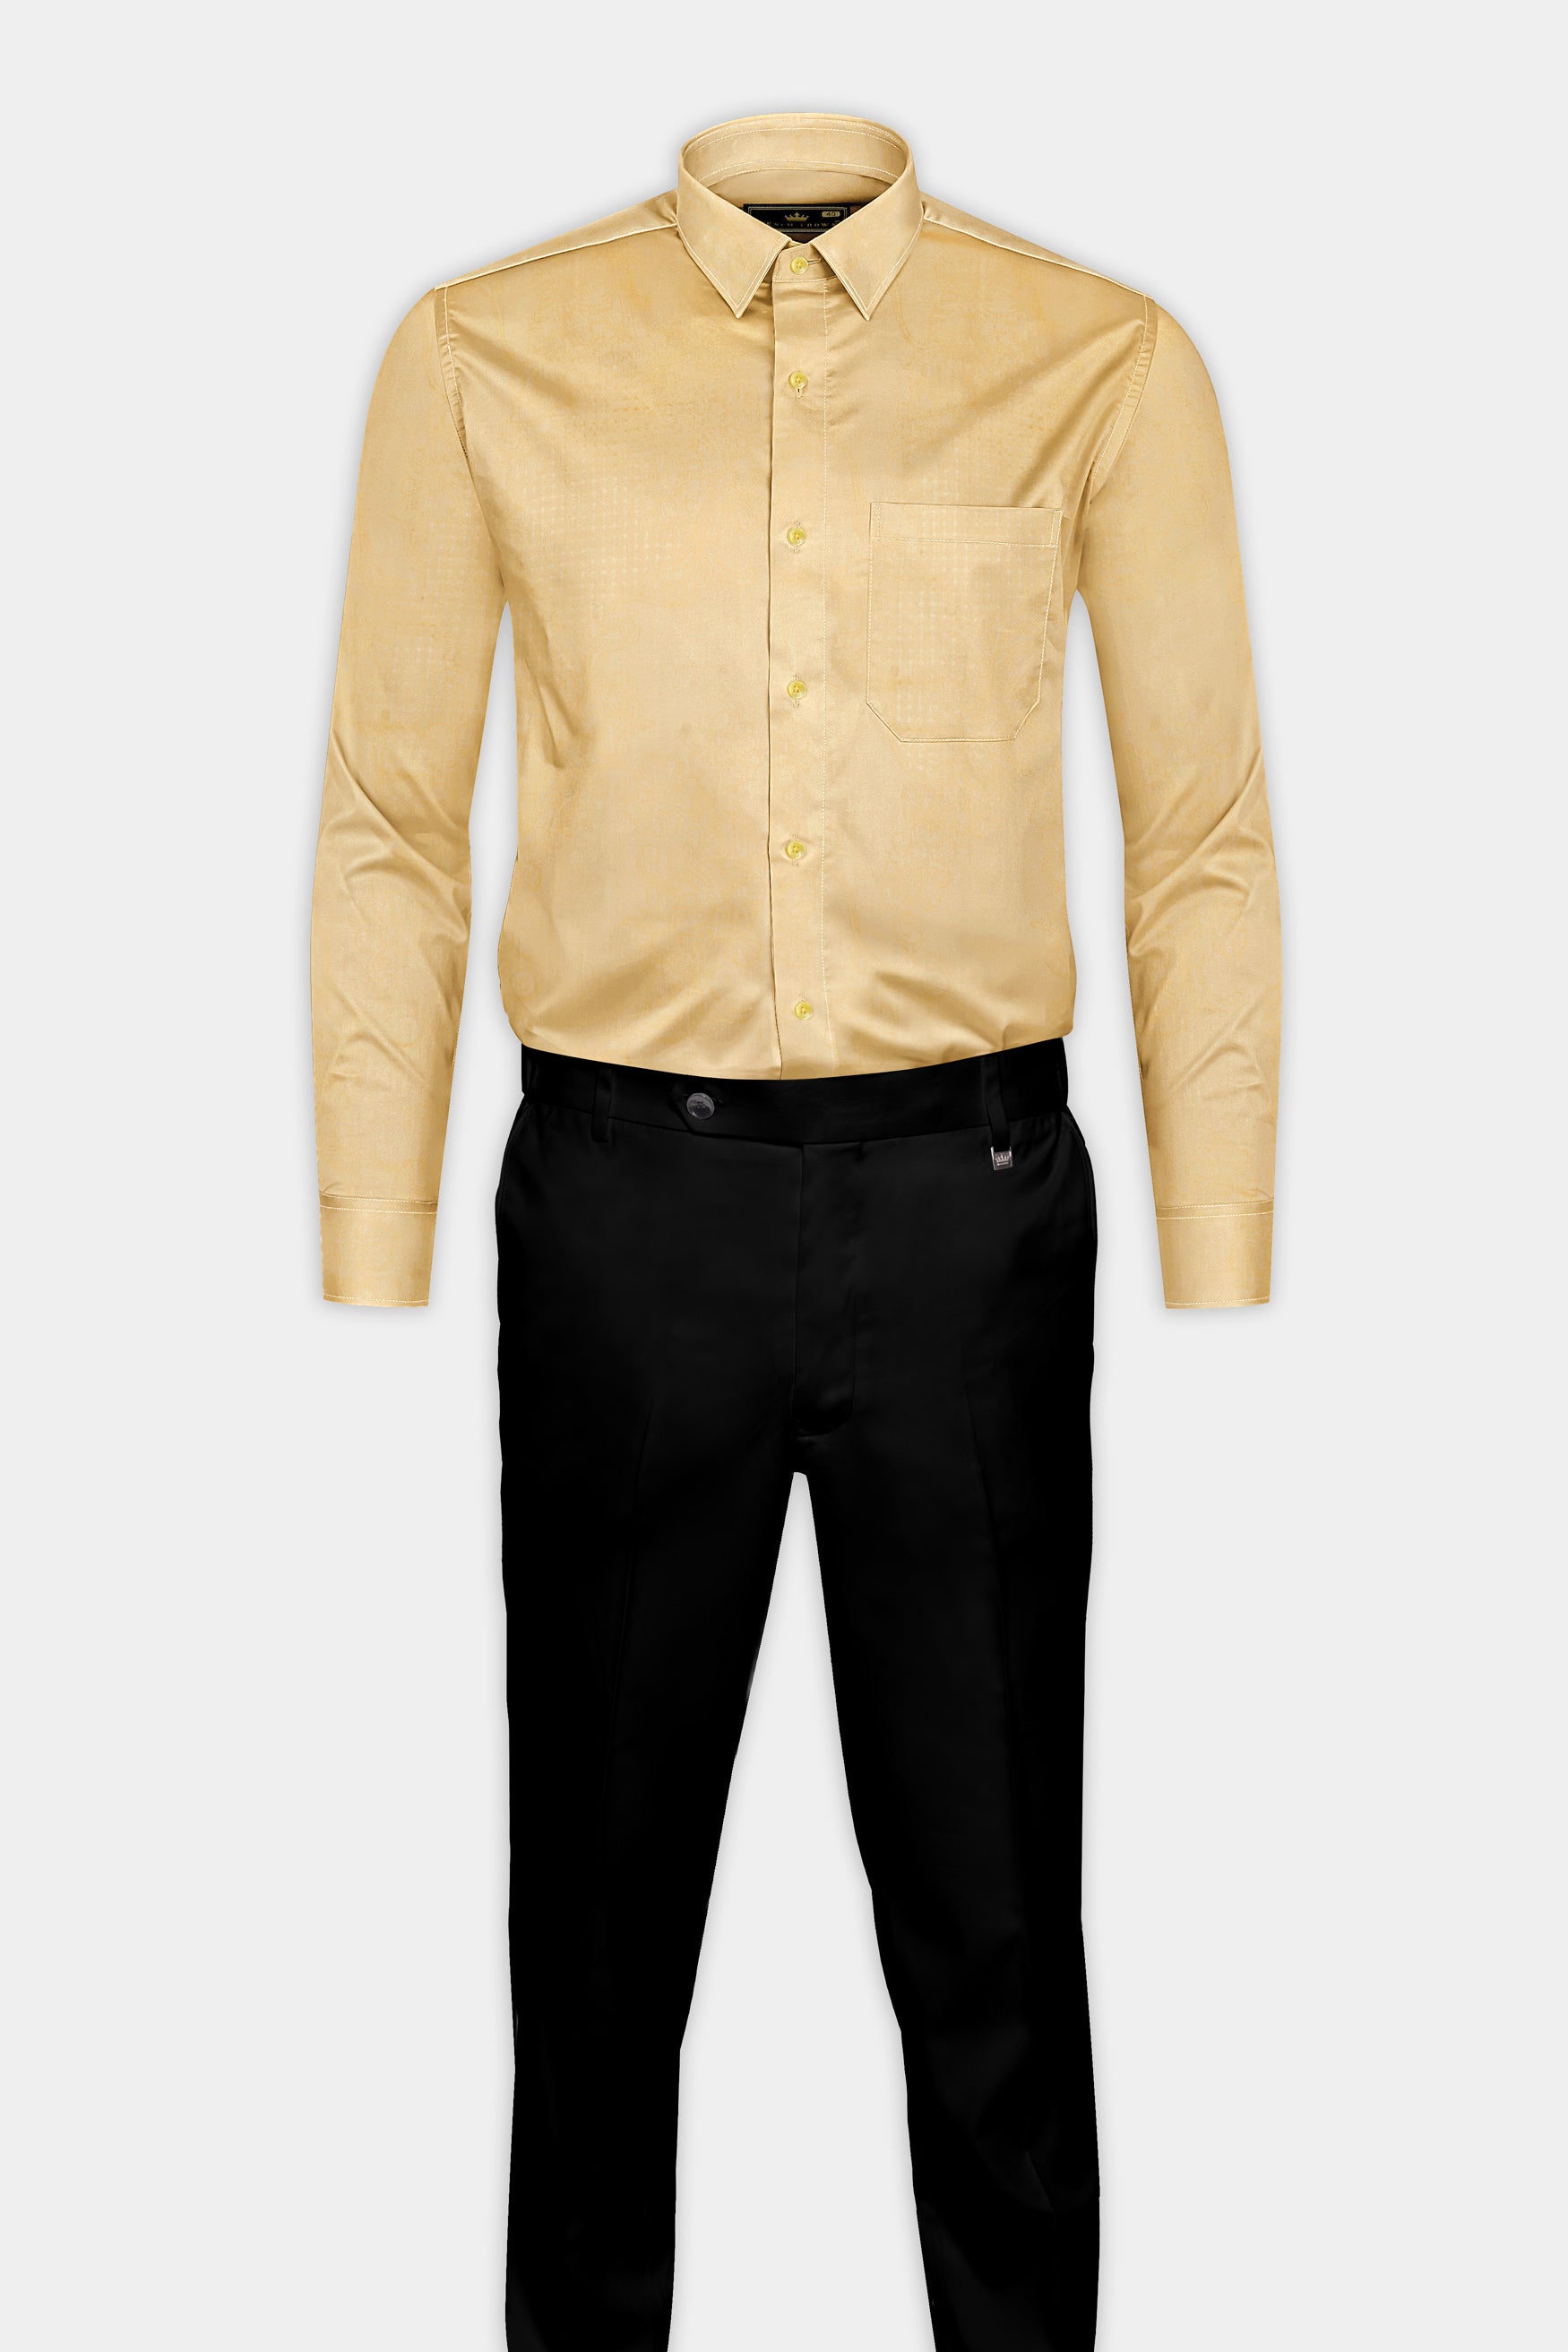 Tacao Yellow Jacquard Textured Premium Giza Cotton Shirt